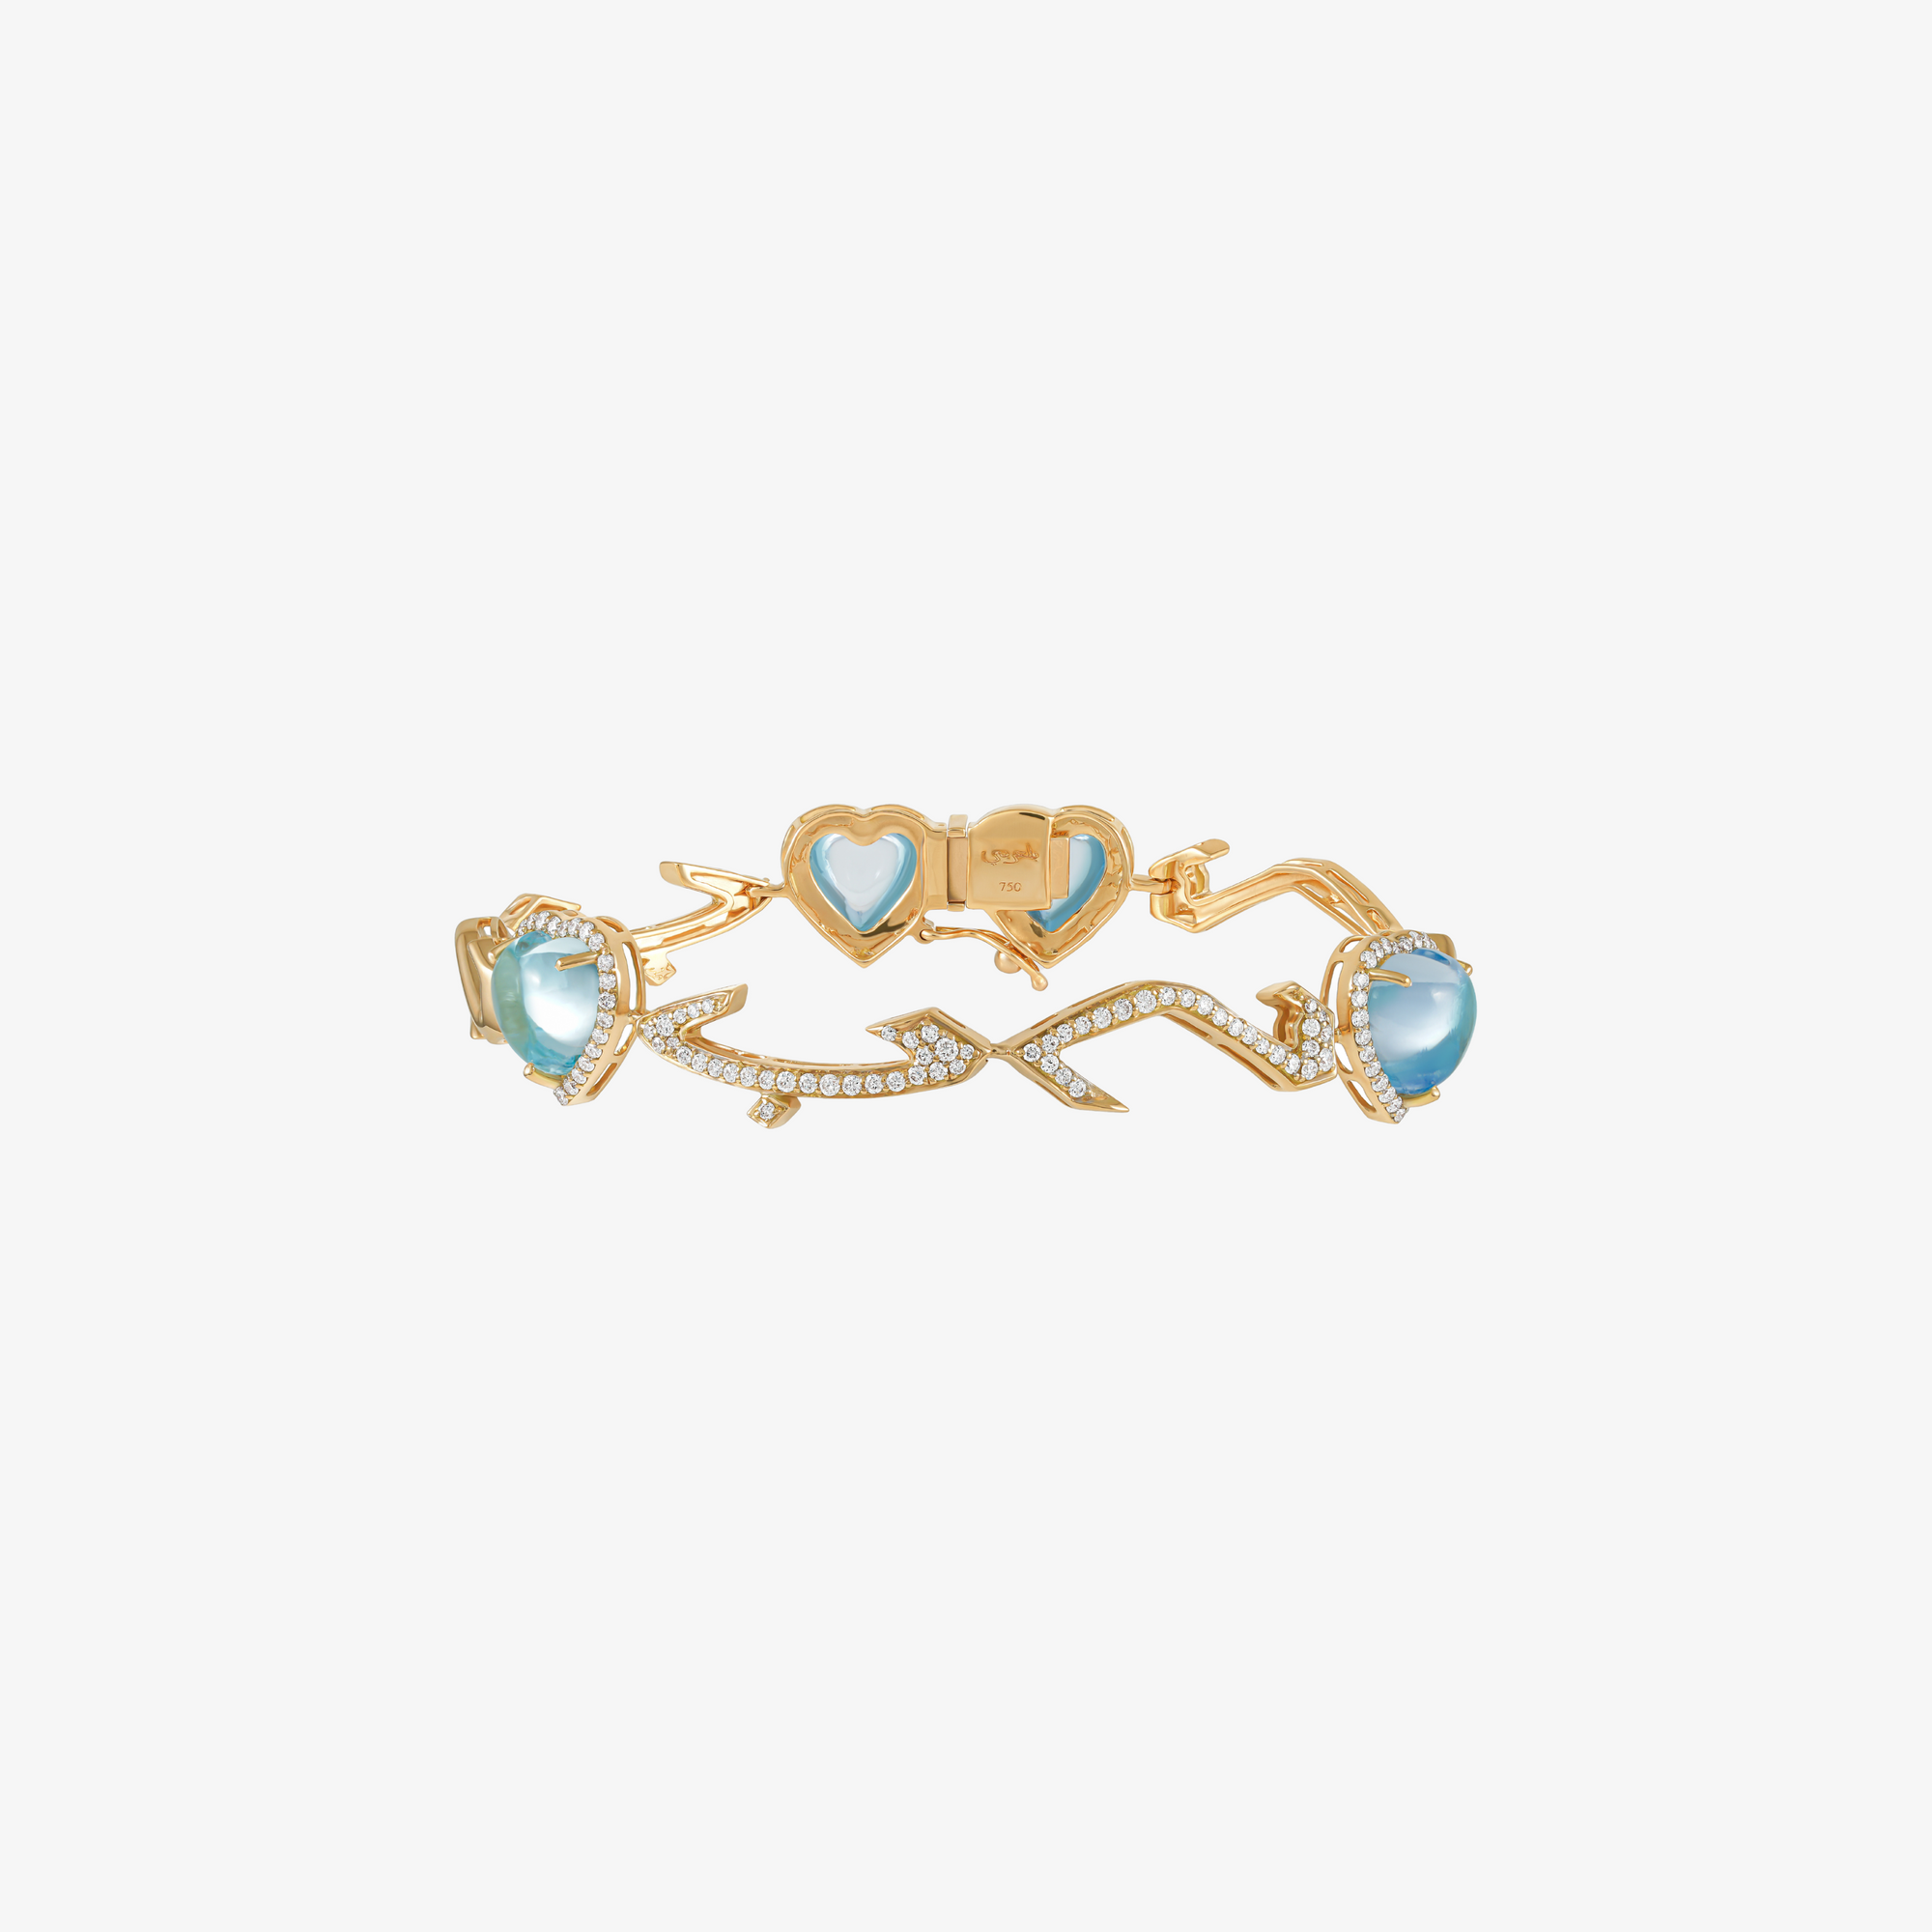 TAIM - 18K Gold, Diamond & Blue Topaz "Love" Bracelet